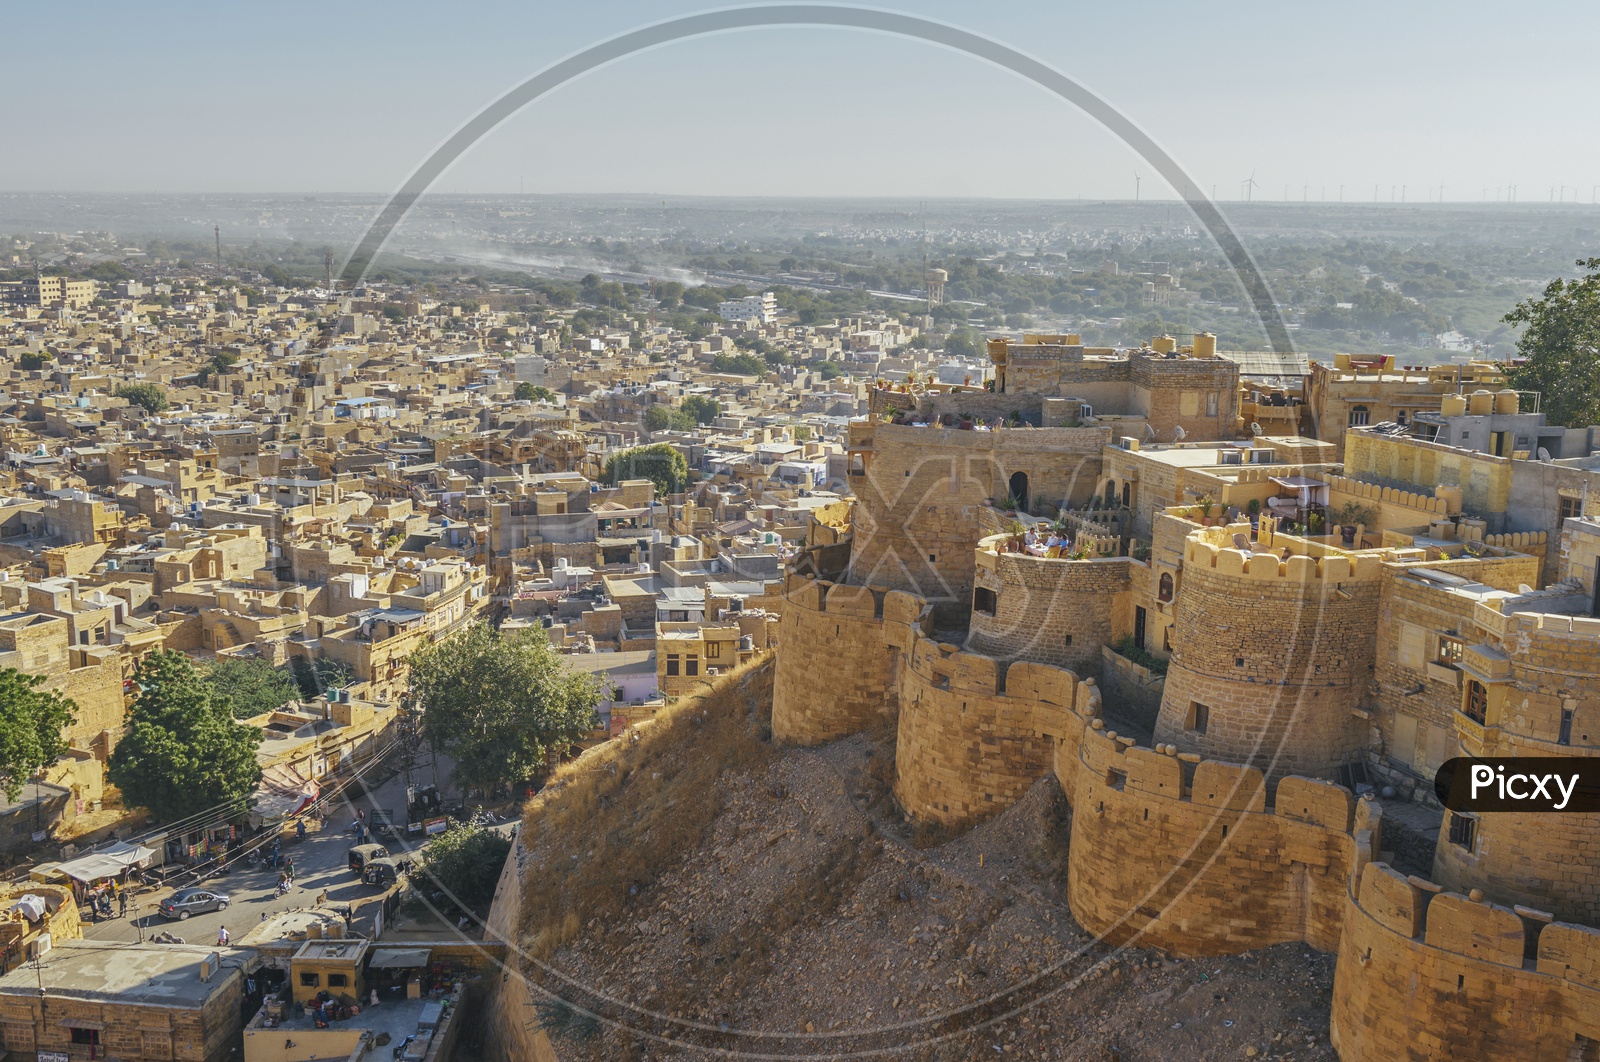 Jaisalmer City